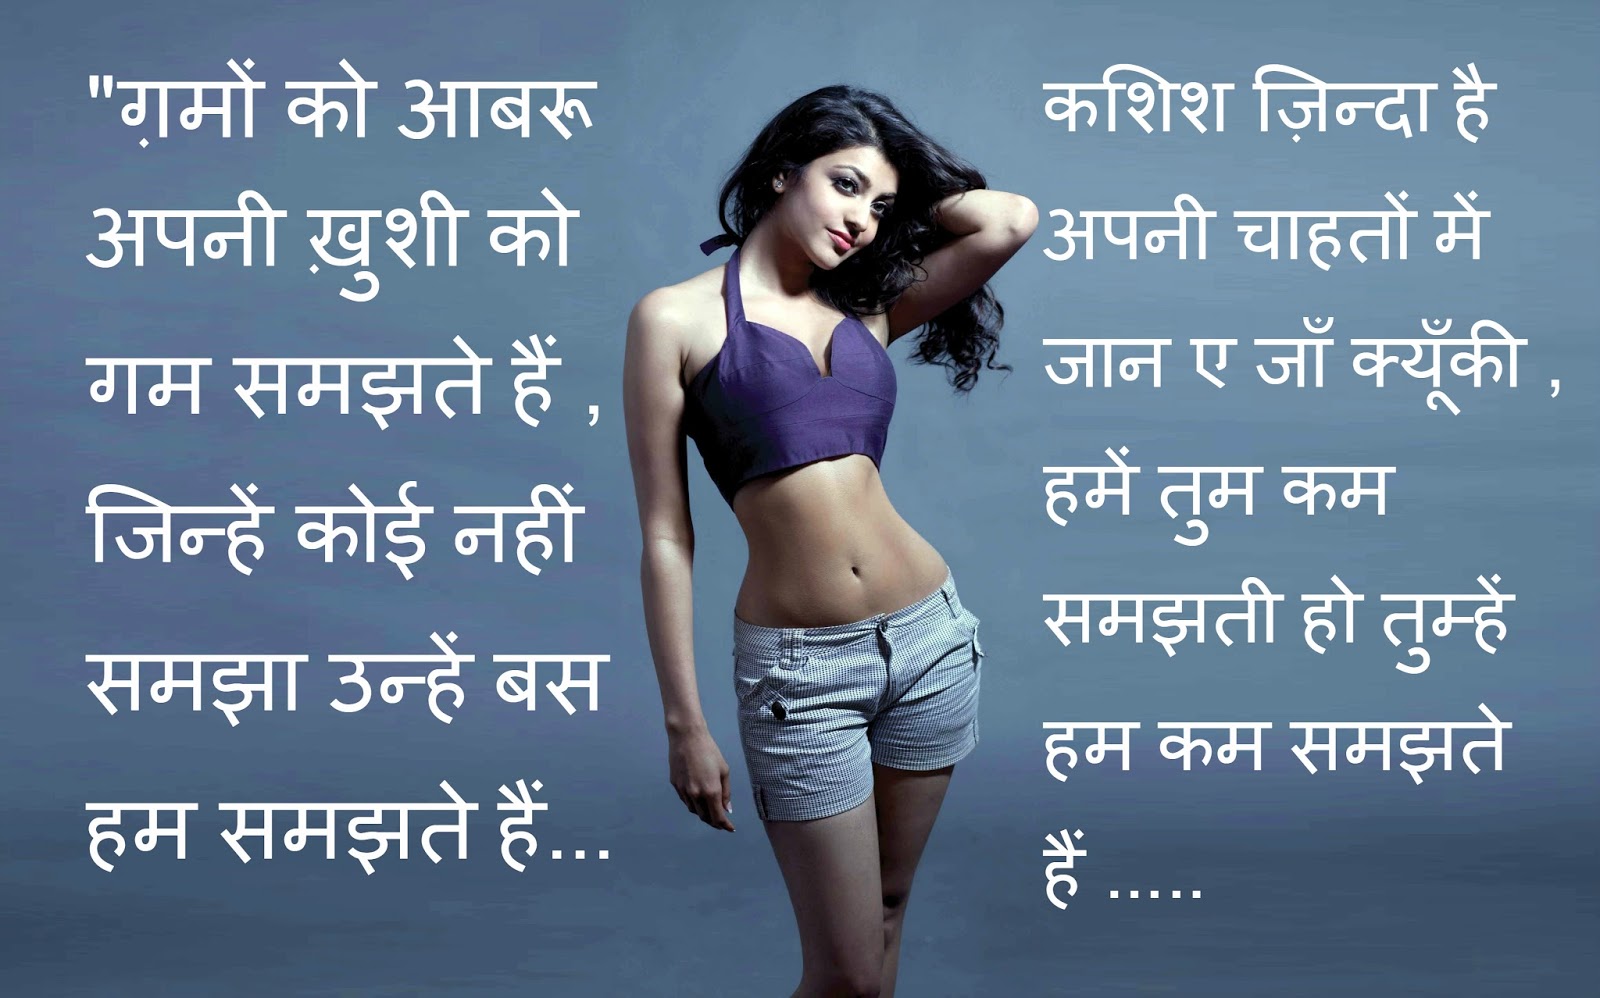 Hindi Romantic Love Shayari for girlfriend hd image